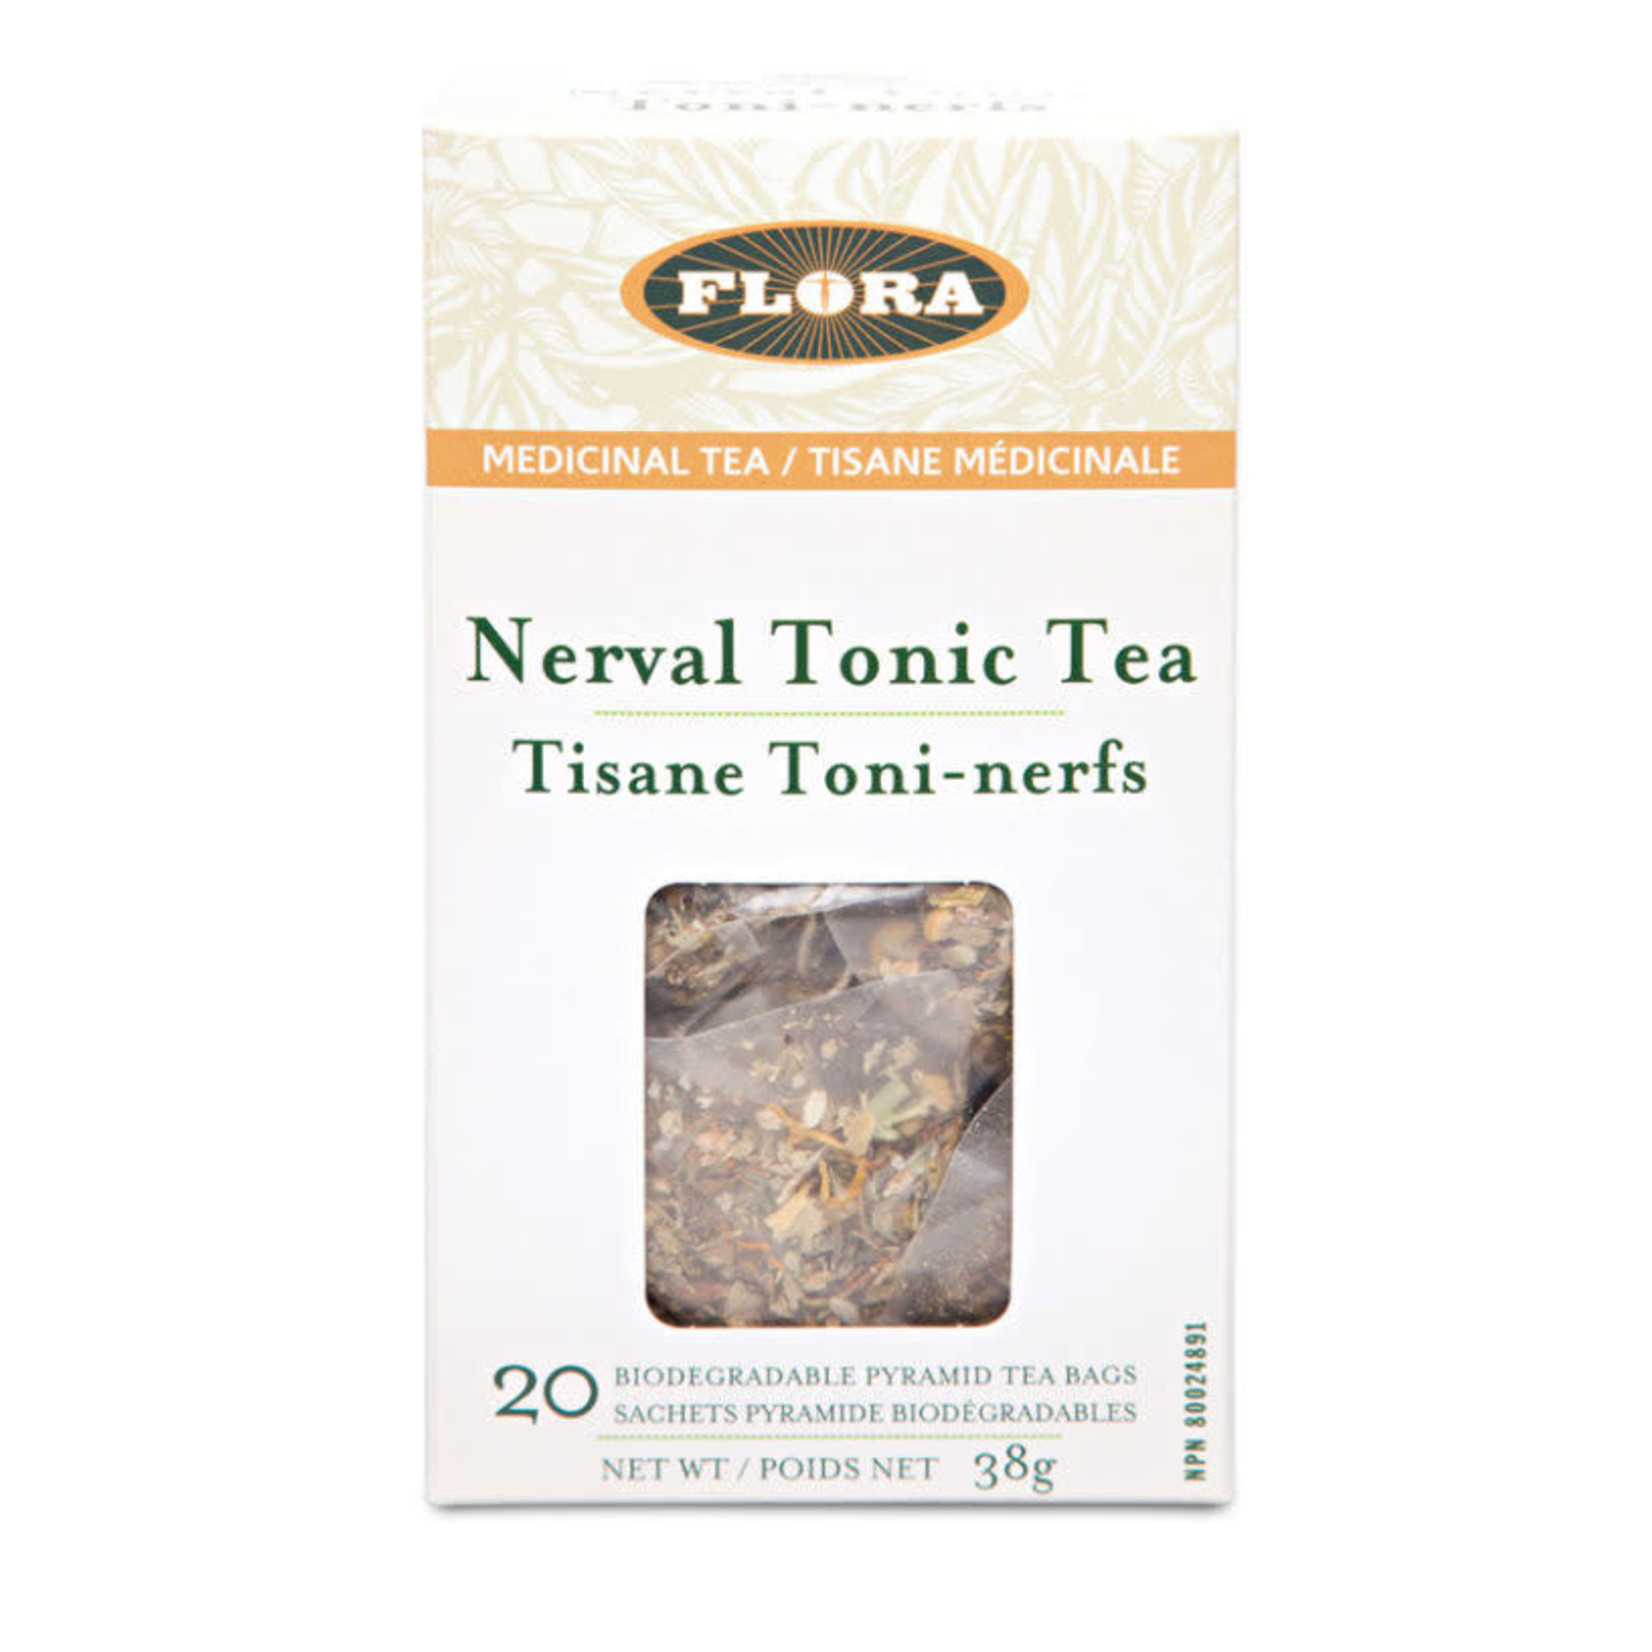 FLORA FLORA NERVAL TONIC TEA 20 BAGS